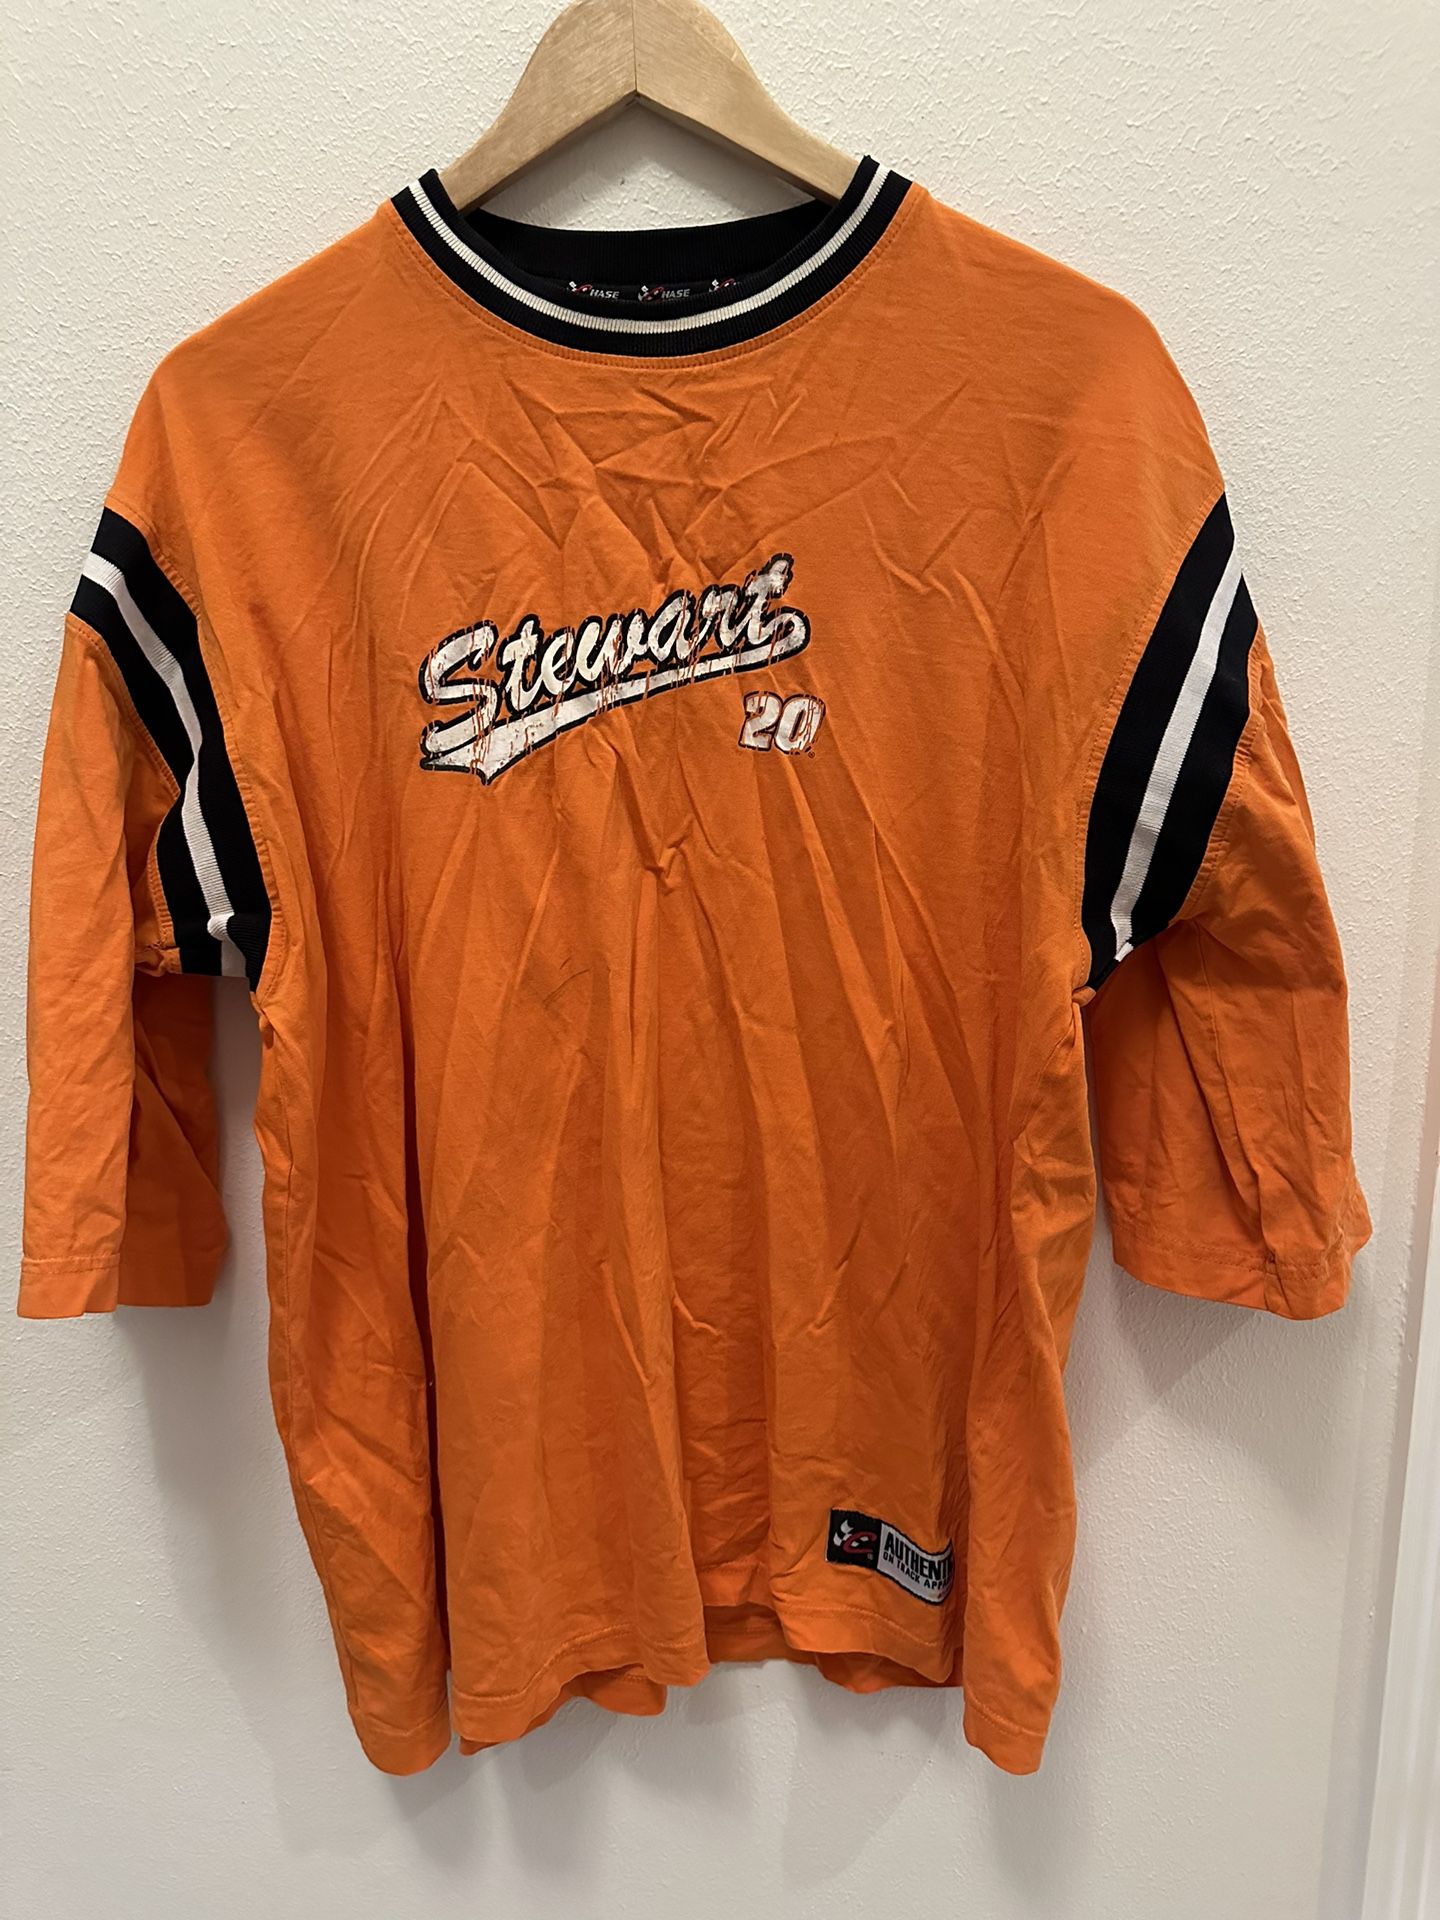 Home Depot Stewart Baseball Shirt Vintage Size XL Pre-owned